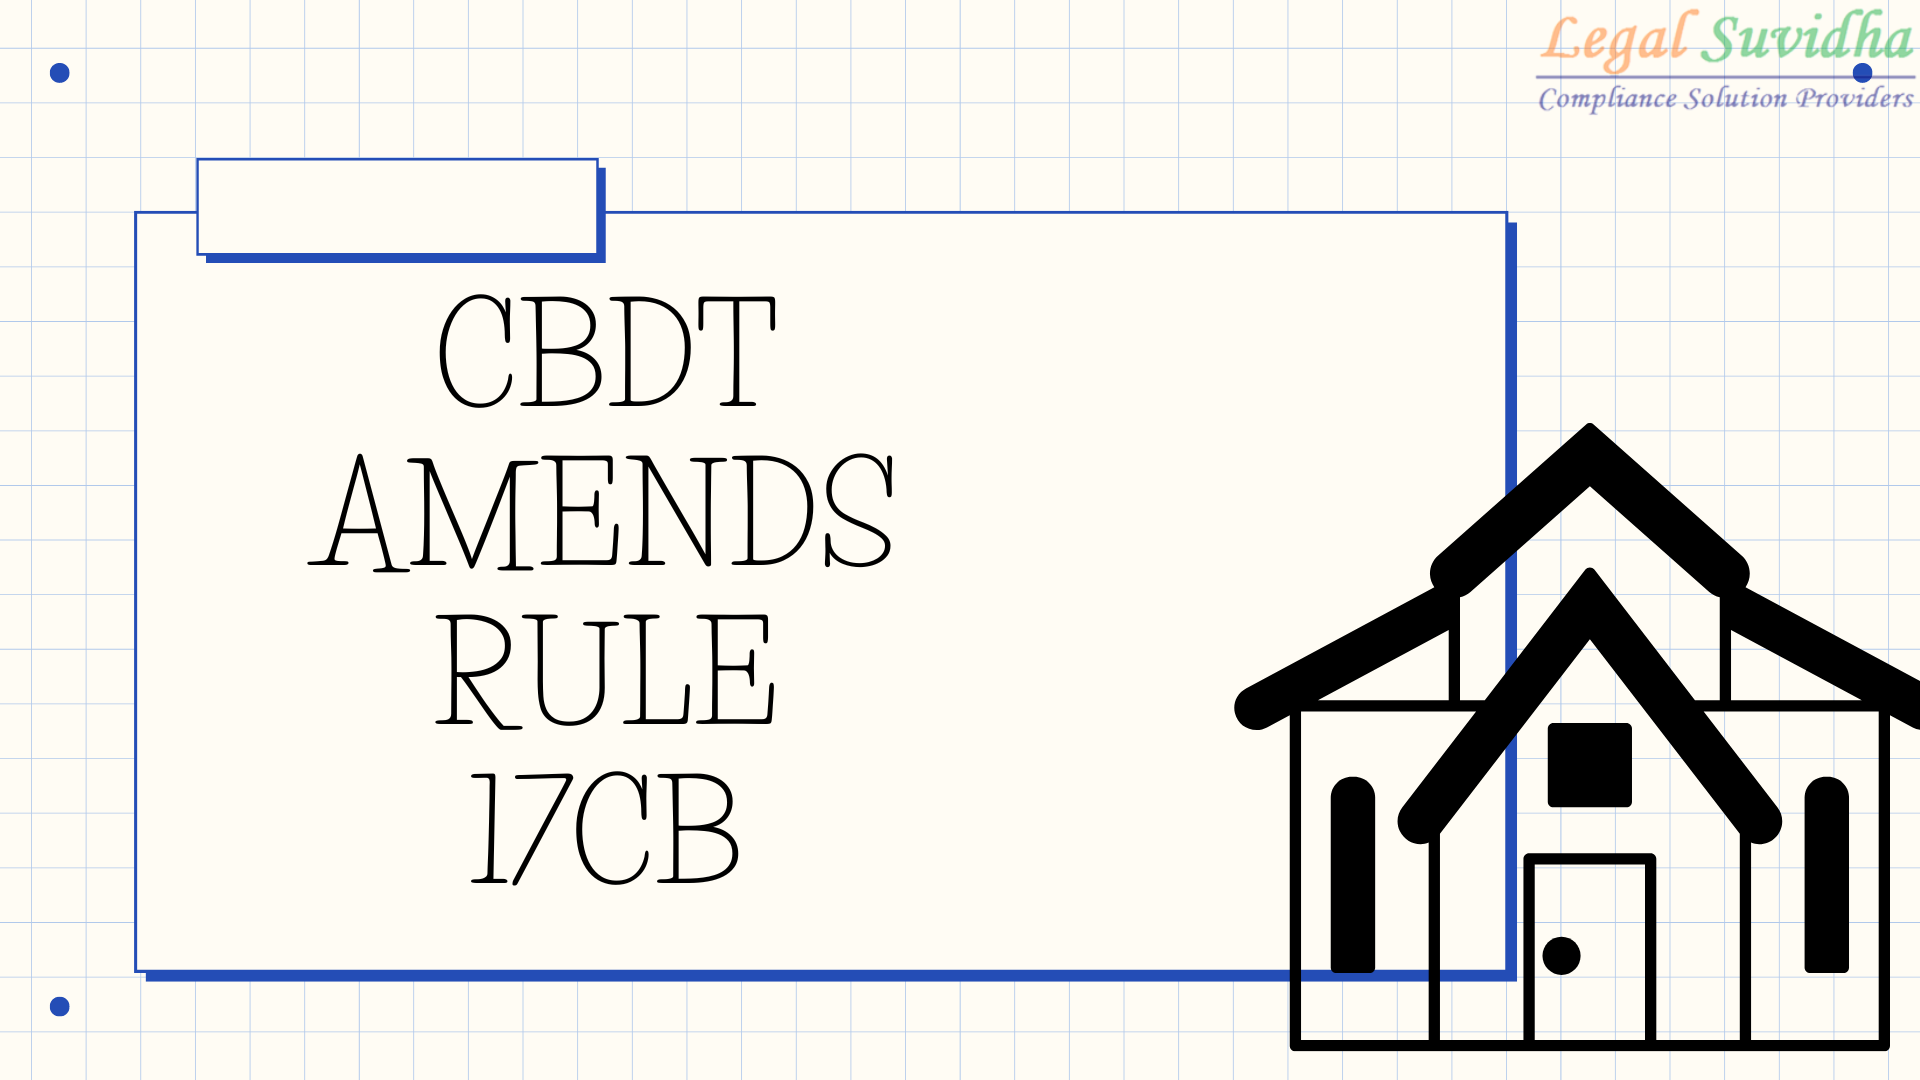 CBDT Amends Rule 17CB